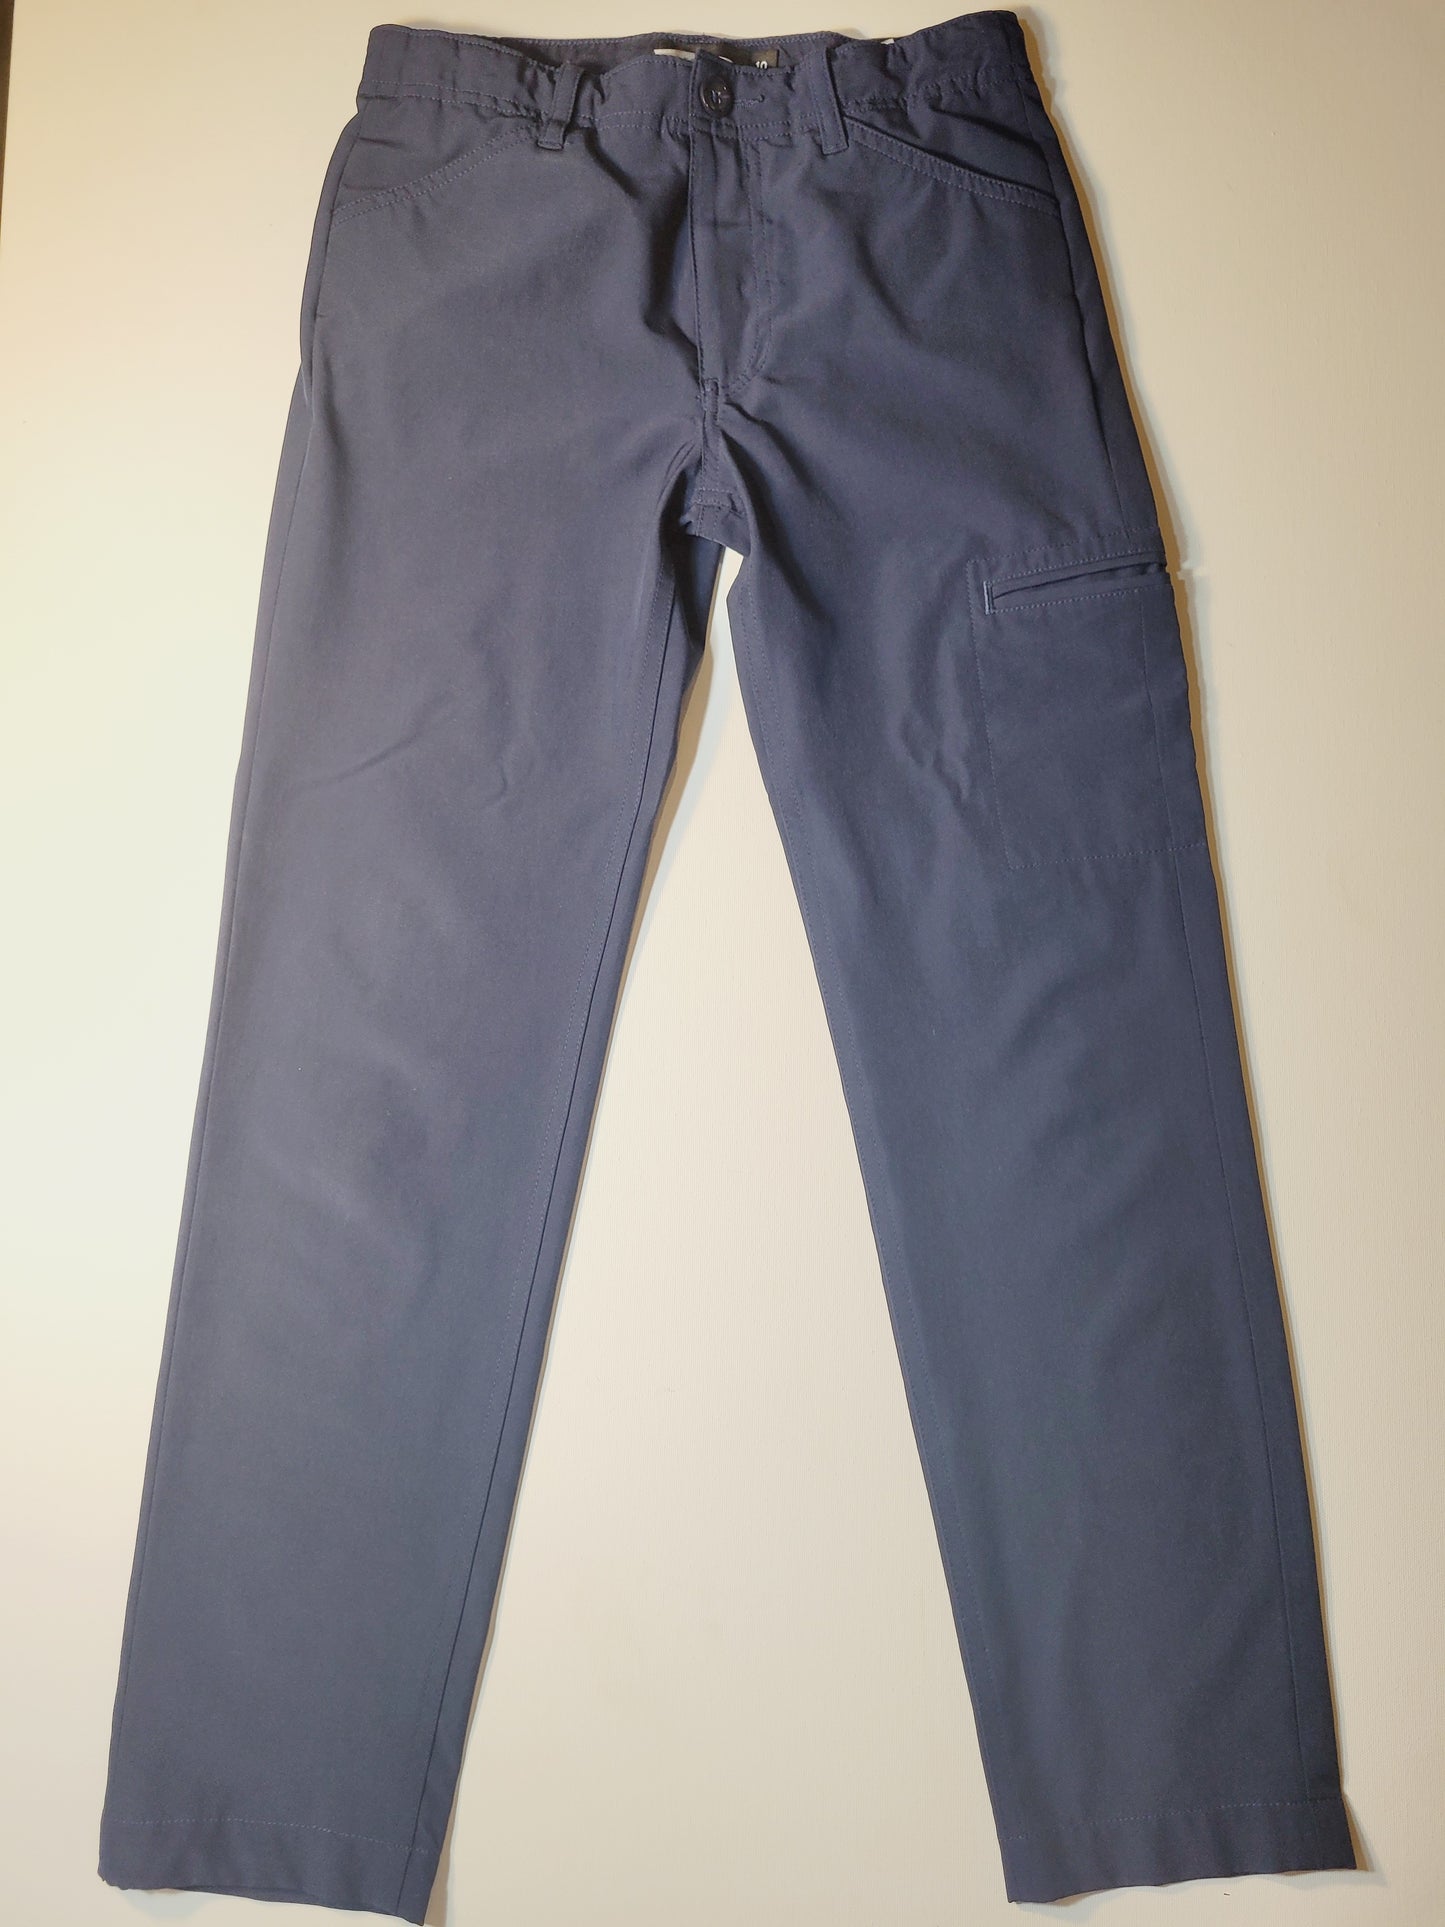 Nordstrom Boys Navy Blue Pants Size 10  PPU 45226